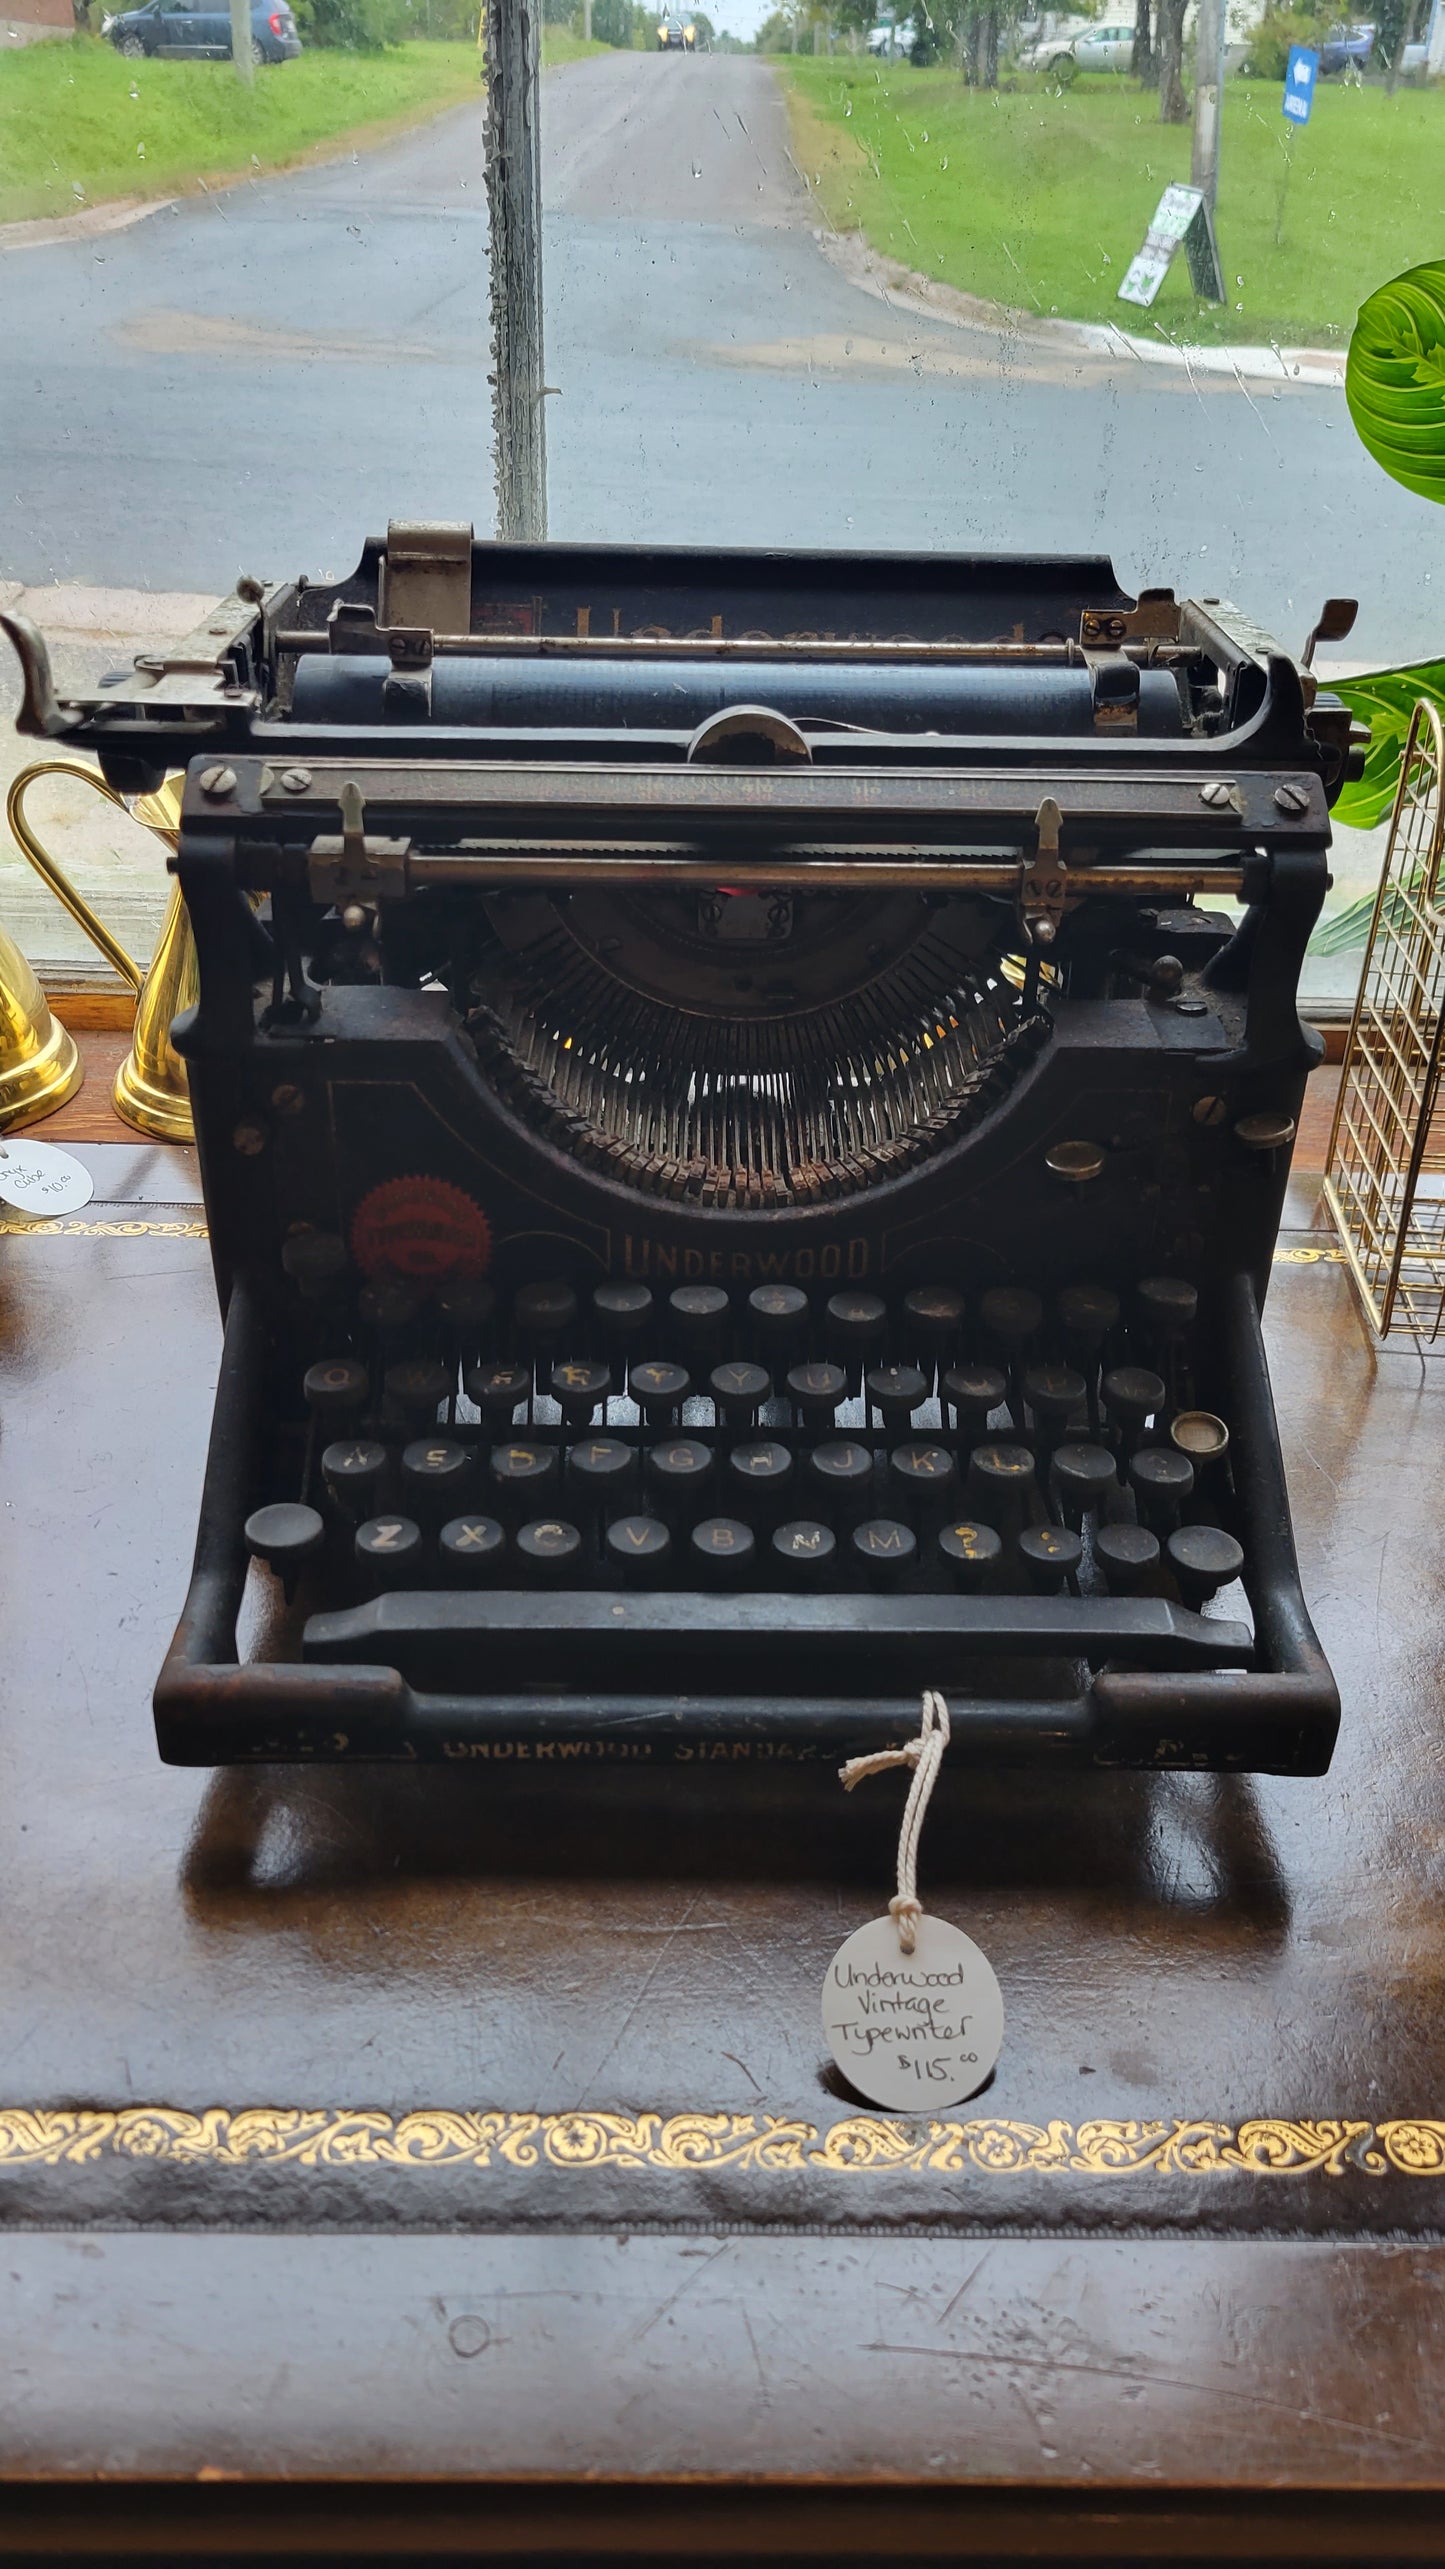 Underwood Vintage Typewriter